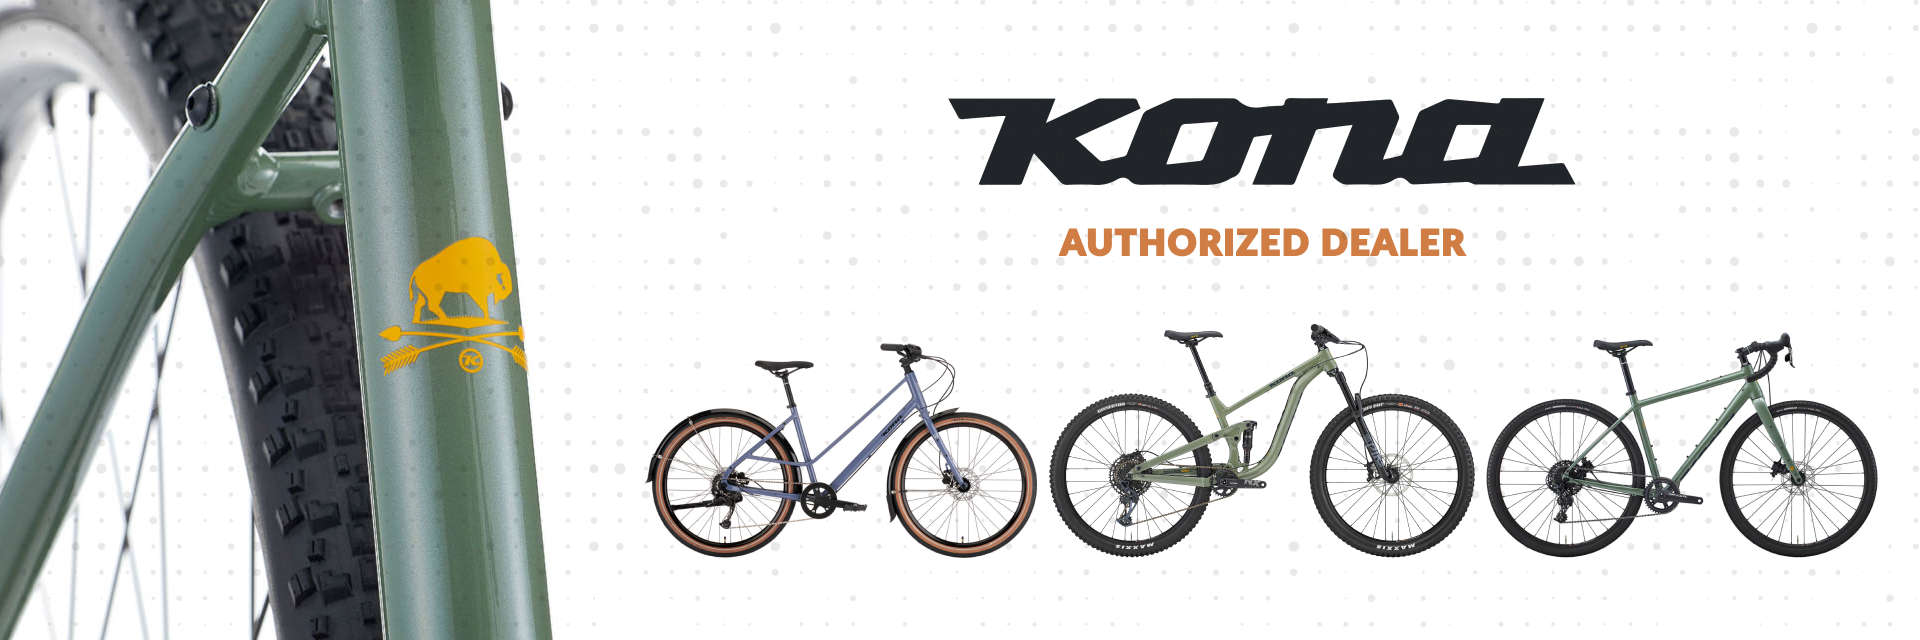 Kona Bikes Authorized Dealer